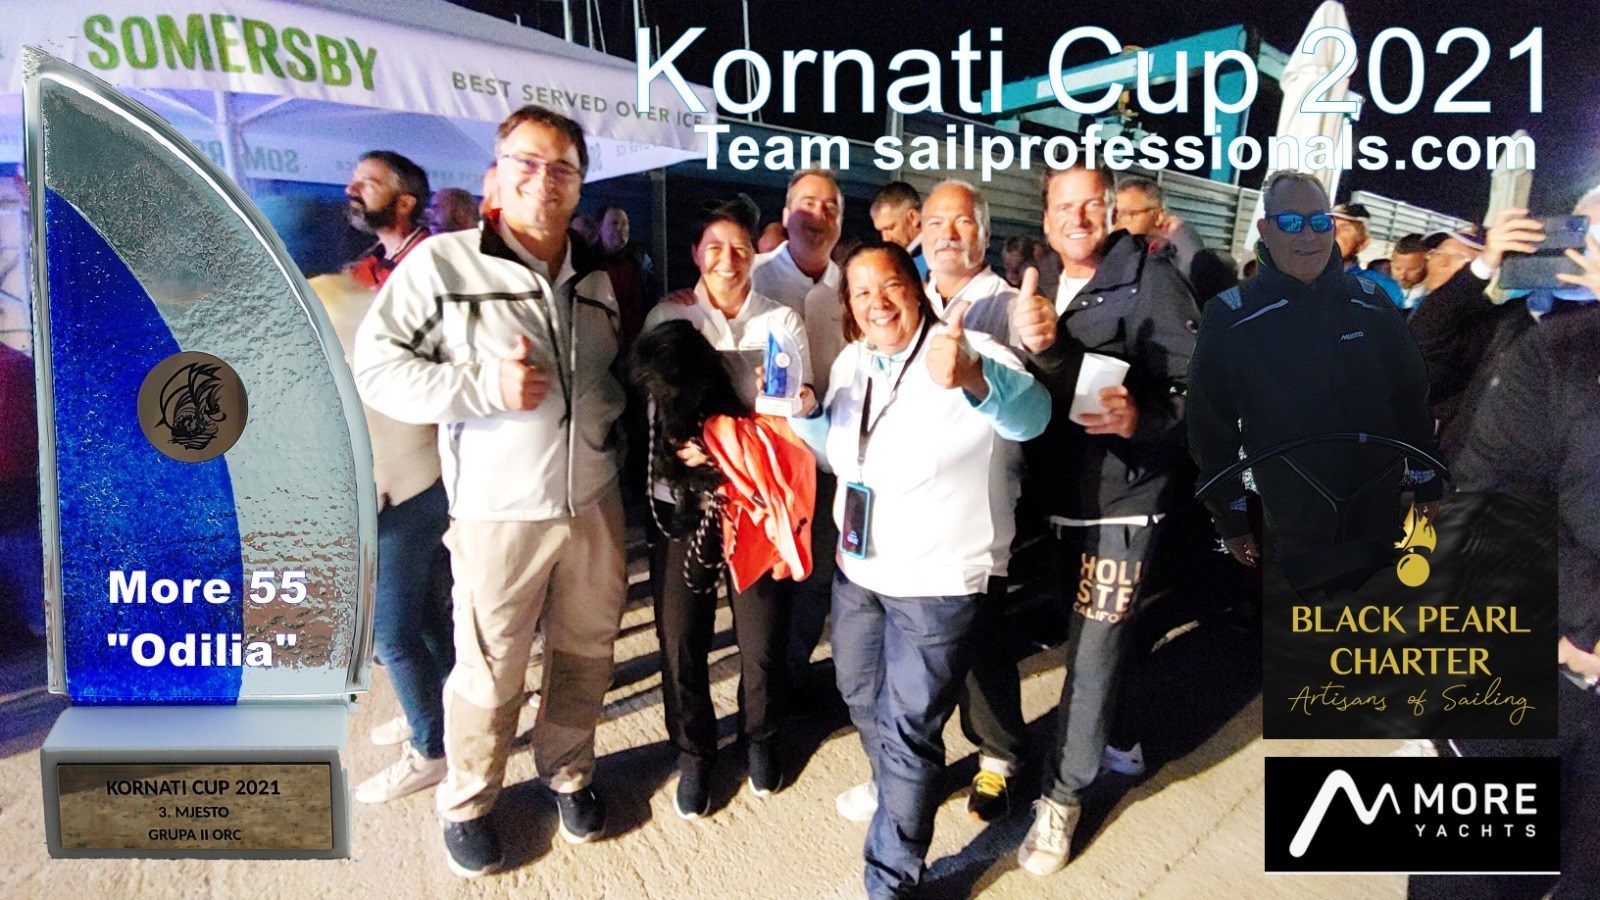 kornati cup sailprofessionals team